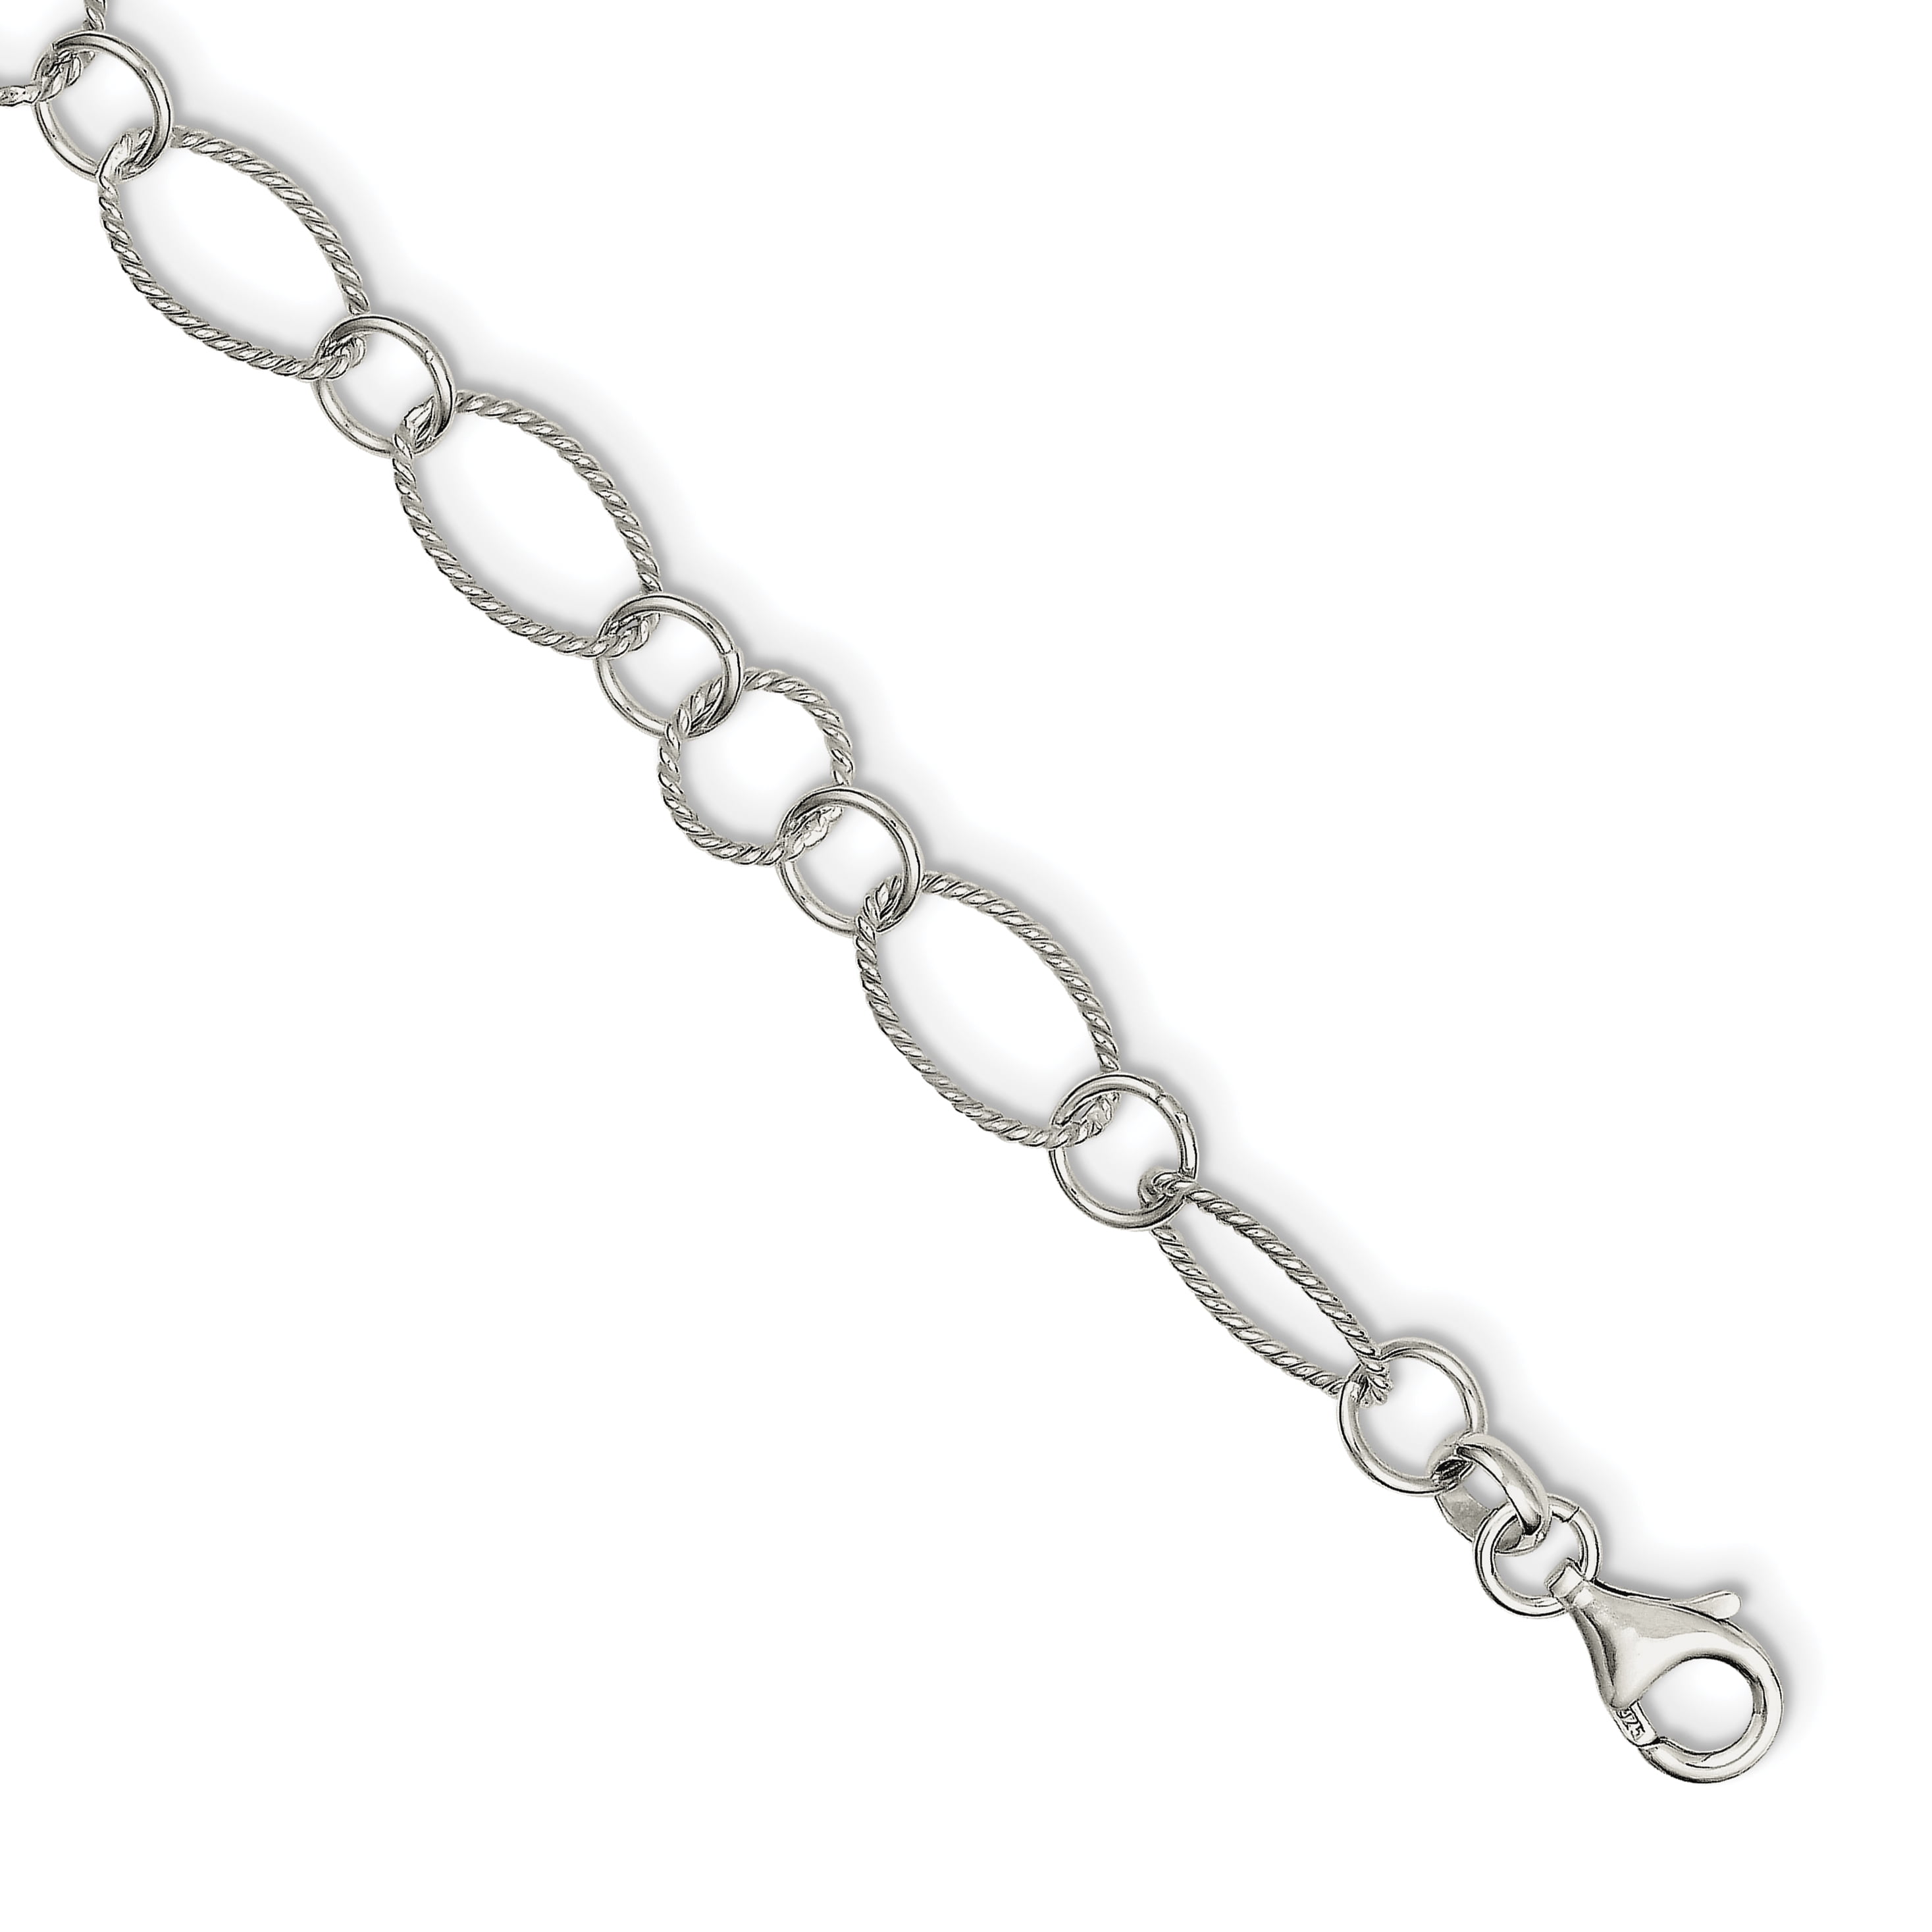 Bracelet sterling silver bracelet